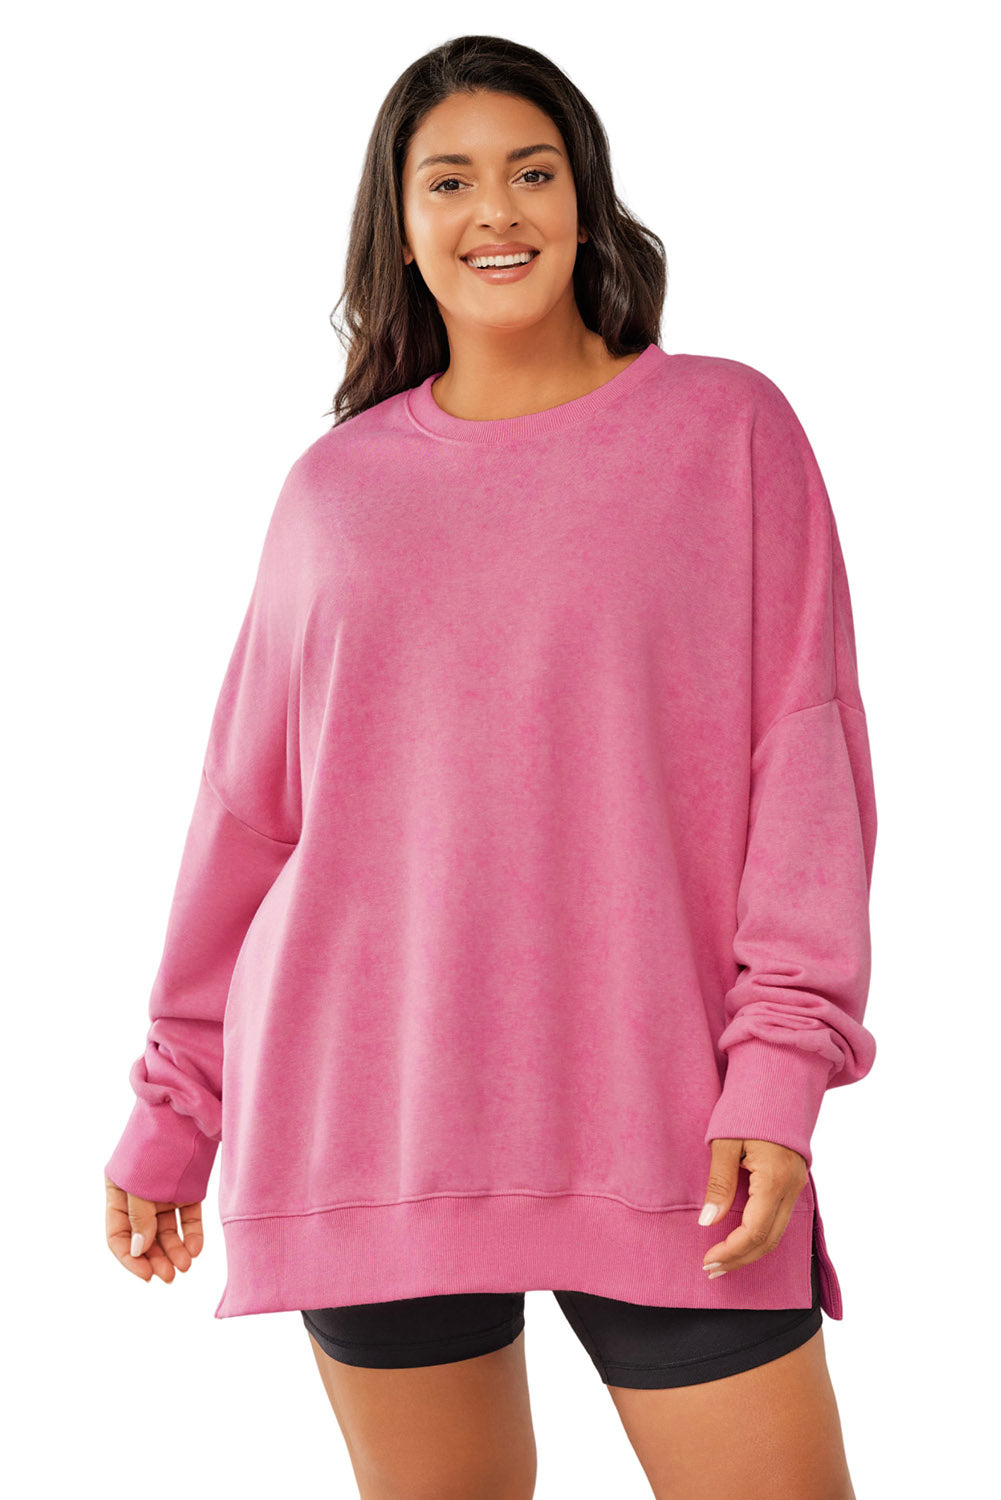 Cali Chic Pink Drop Shoulder Ribbed Trim Plus Size Sweatshirt